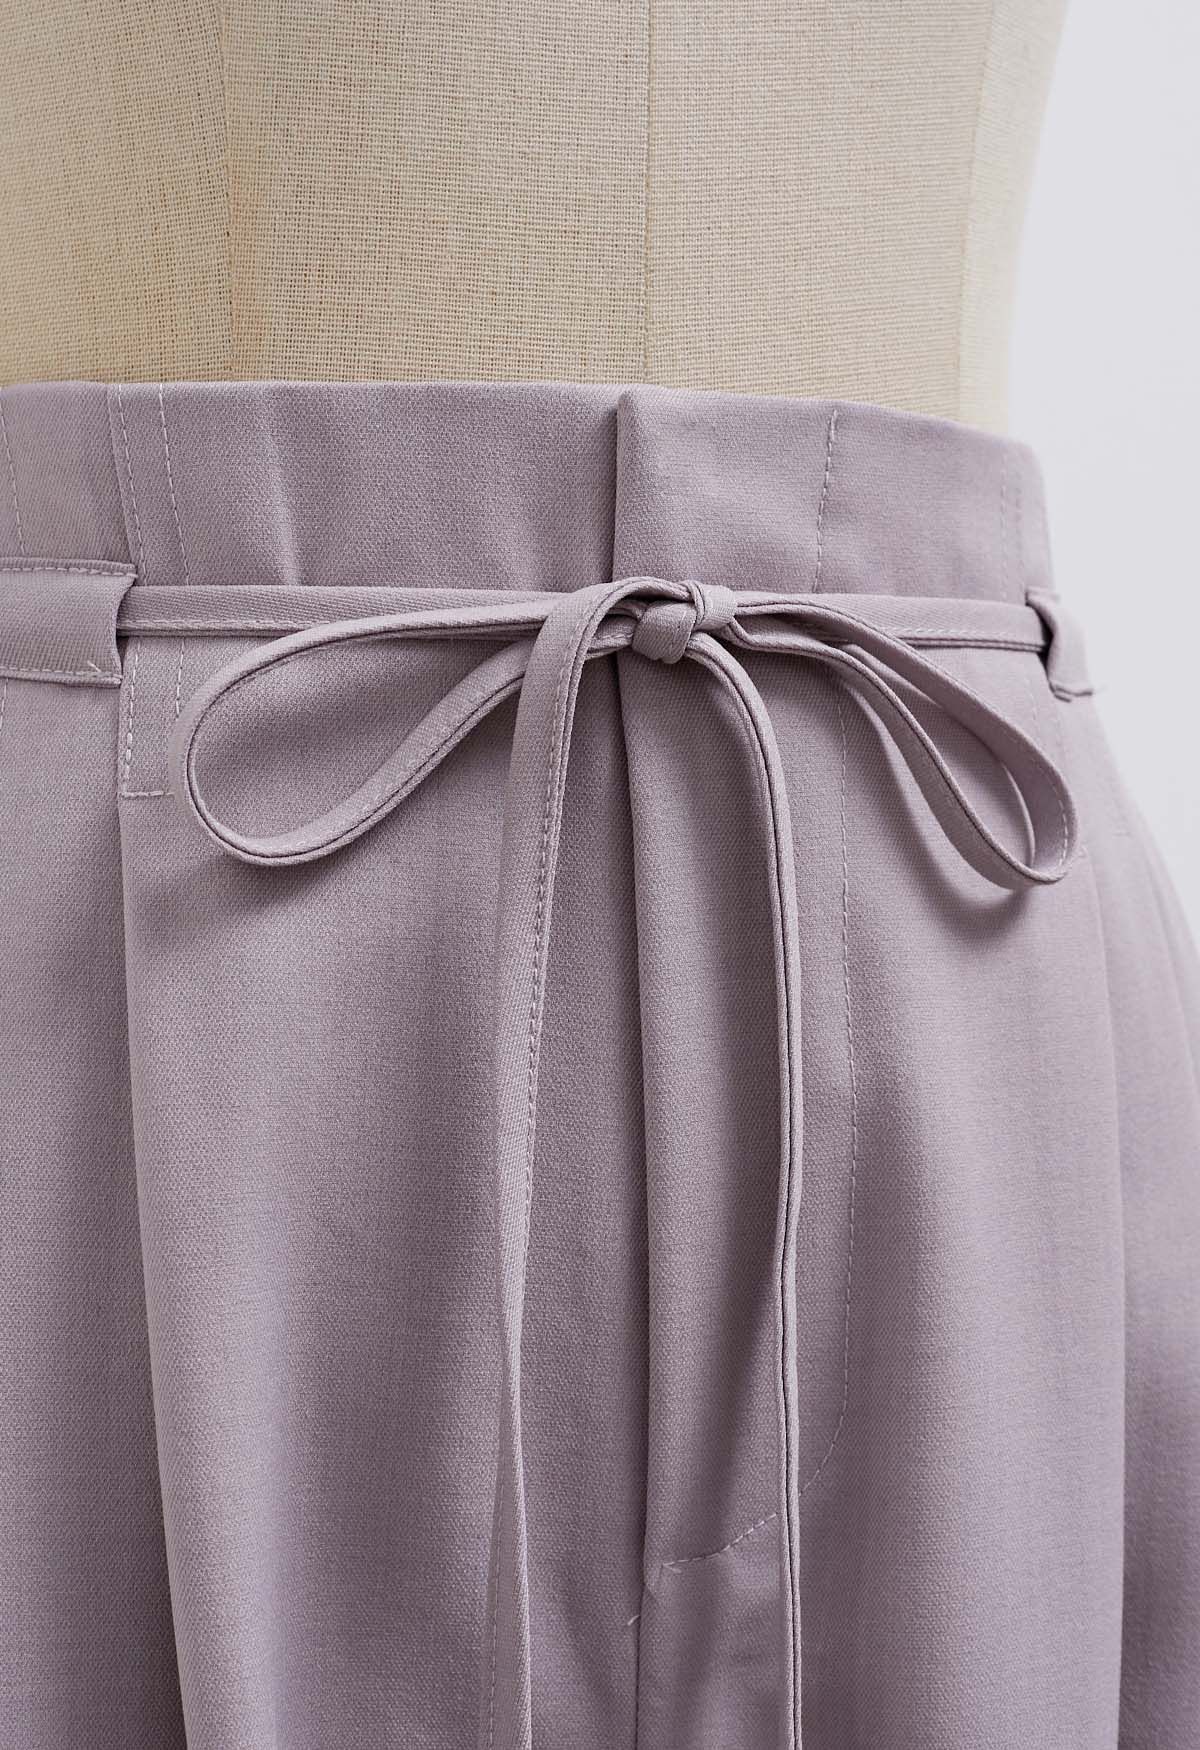 Self-Tie String Pleat Wide-Leg Pants in Lilac